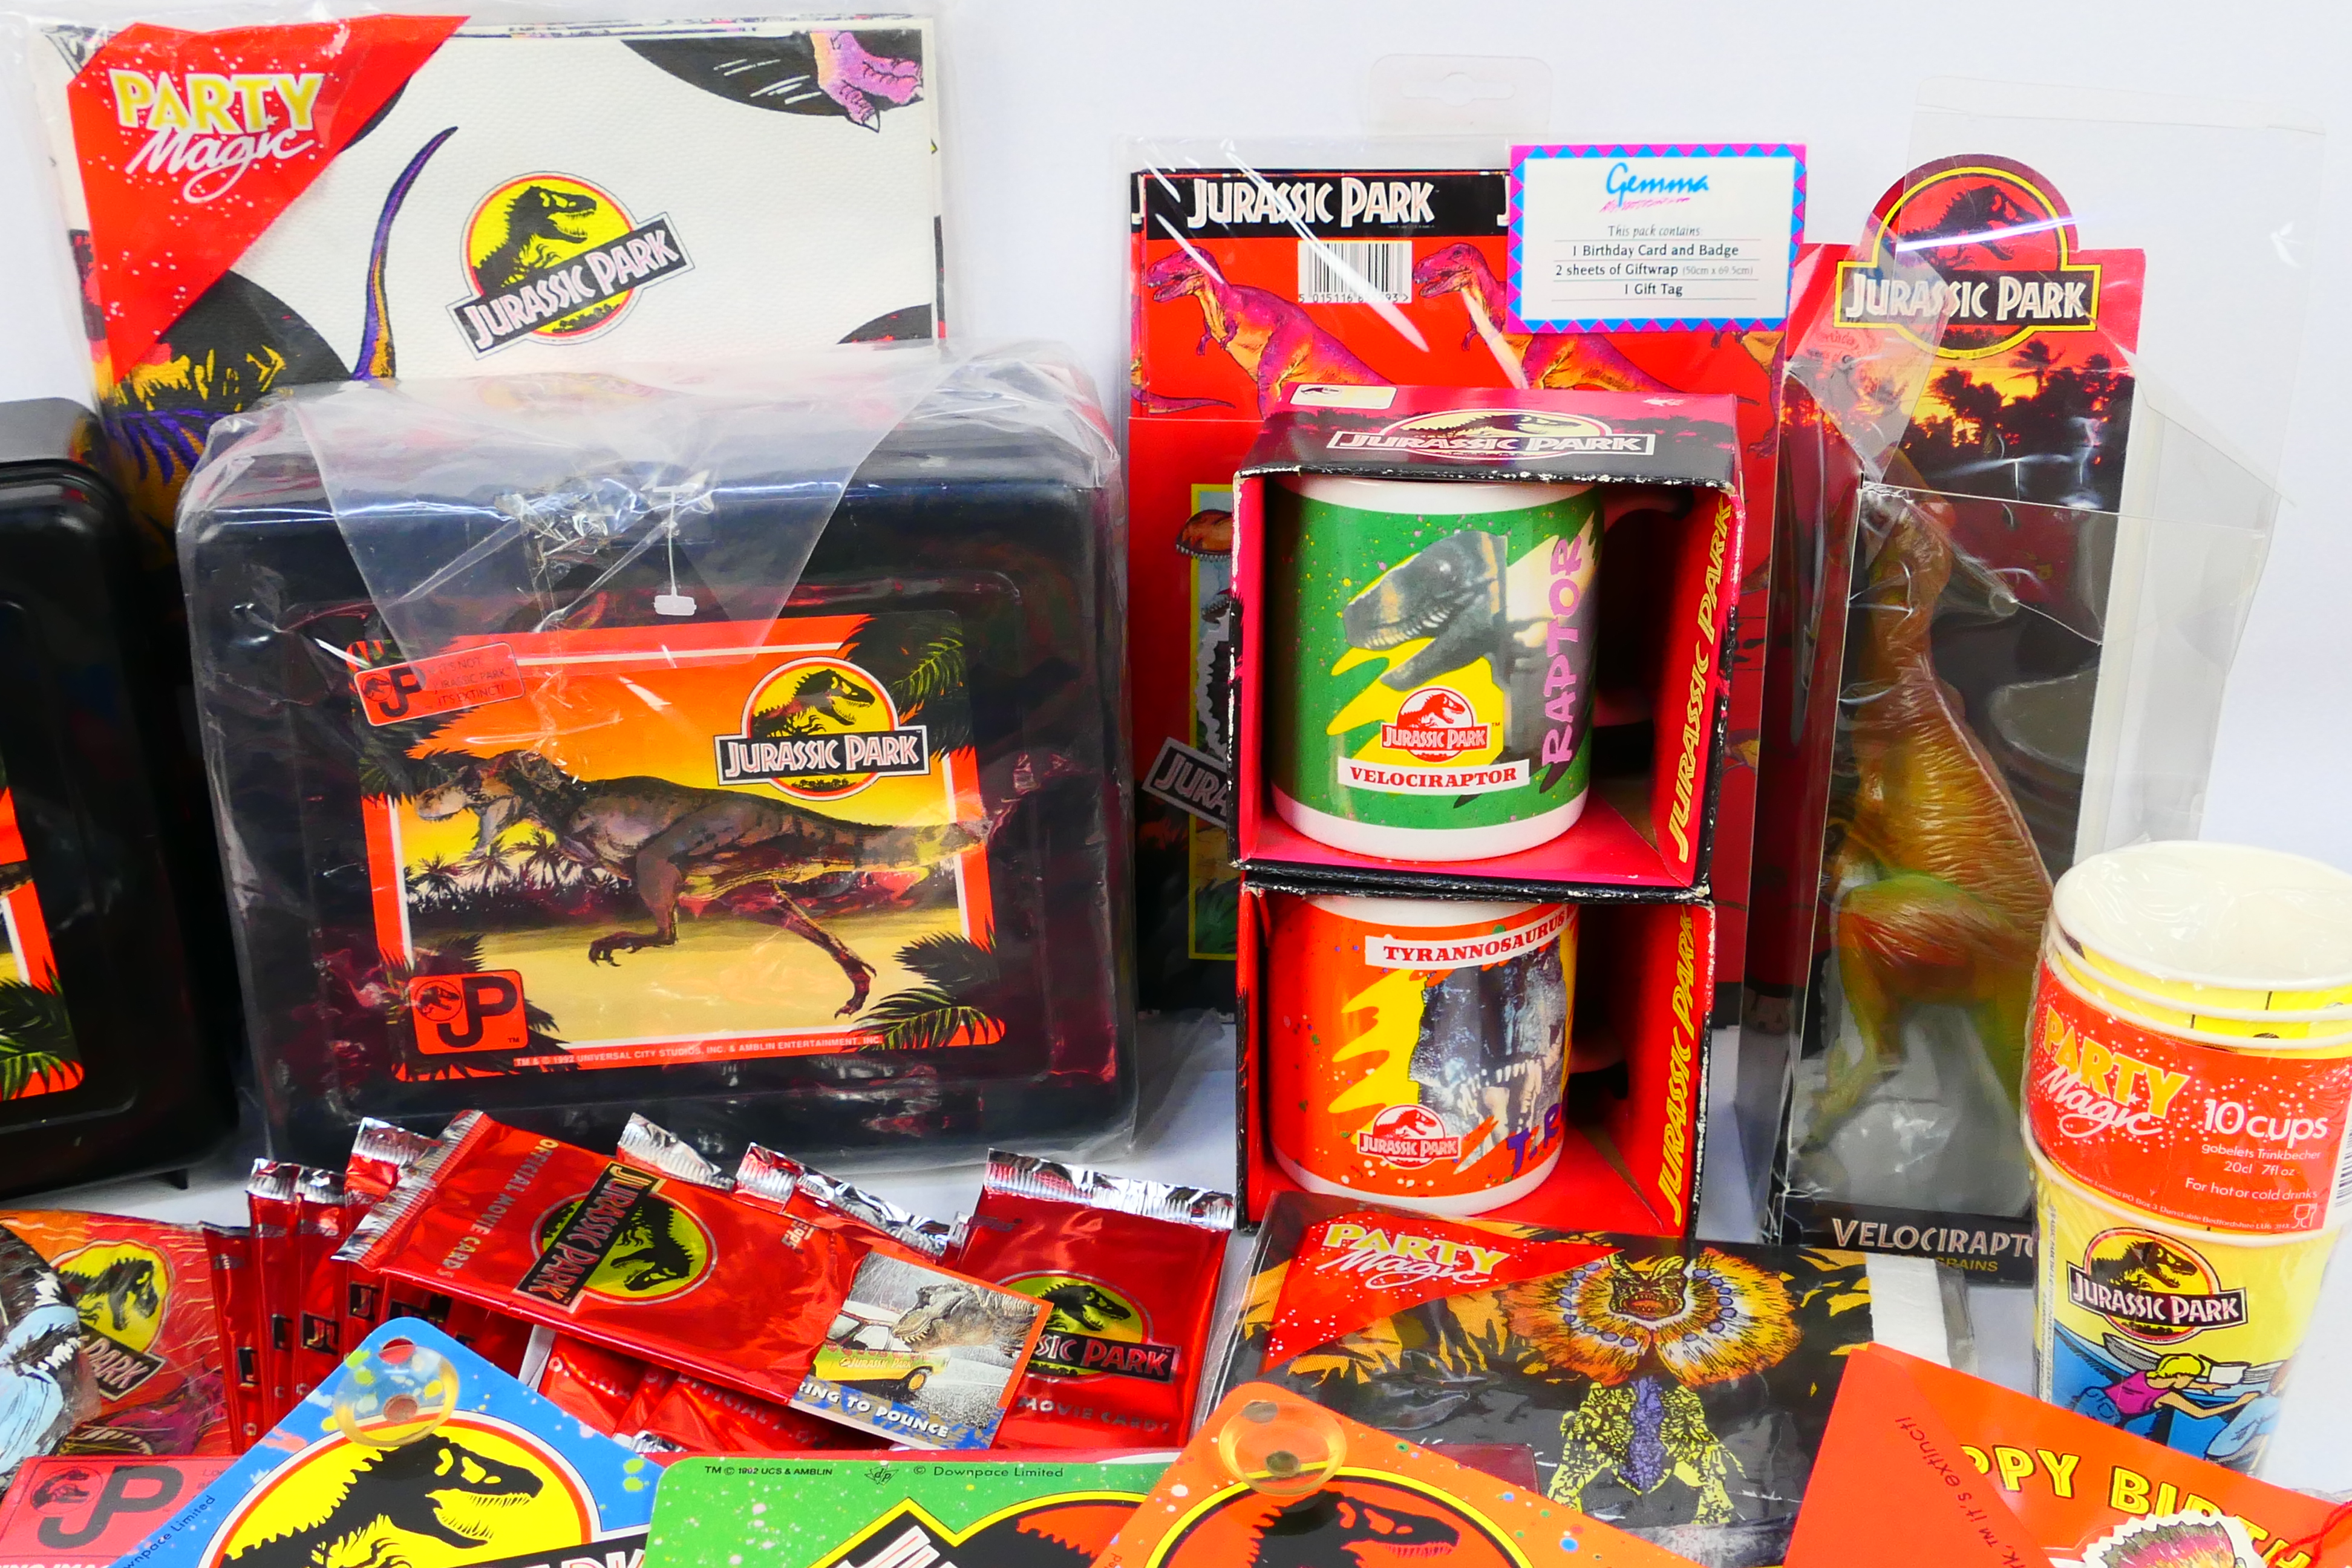 Tiger - Party - Jurassic Park - An assortment of Jurassic Park Merchandise. - Image 3 of 7